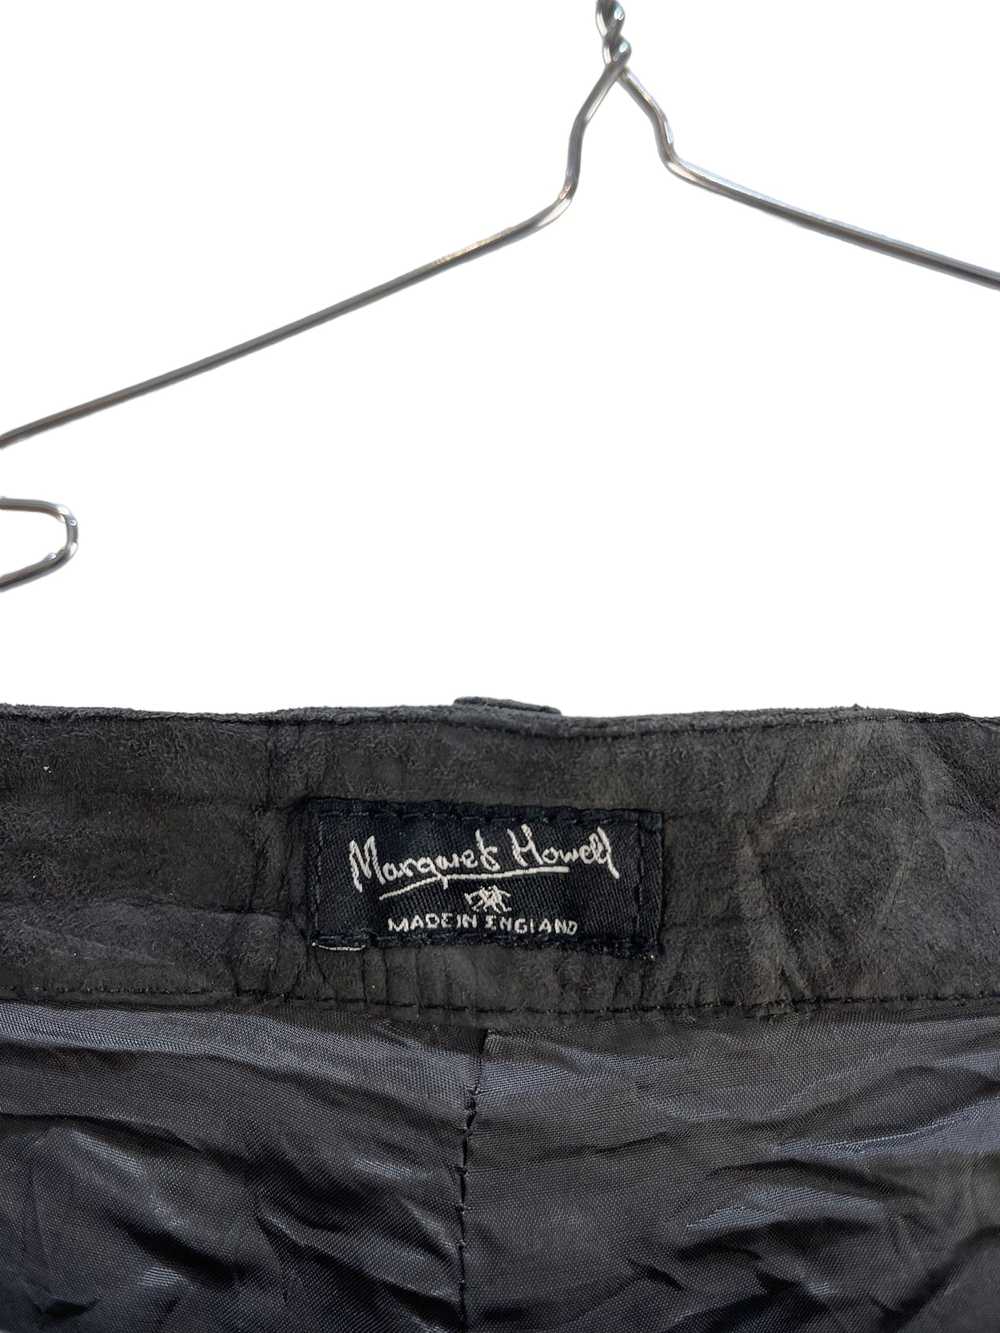 Margaret Howell Margaret Howell Leather Pant - image 8